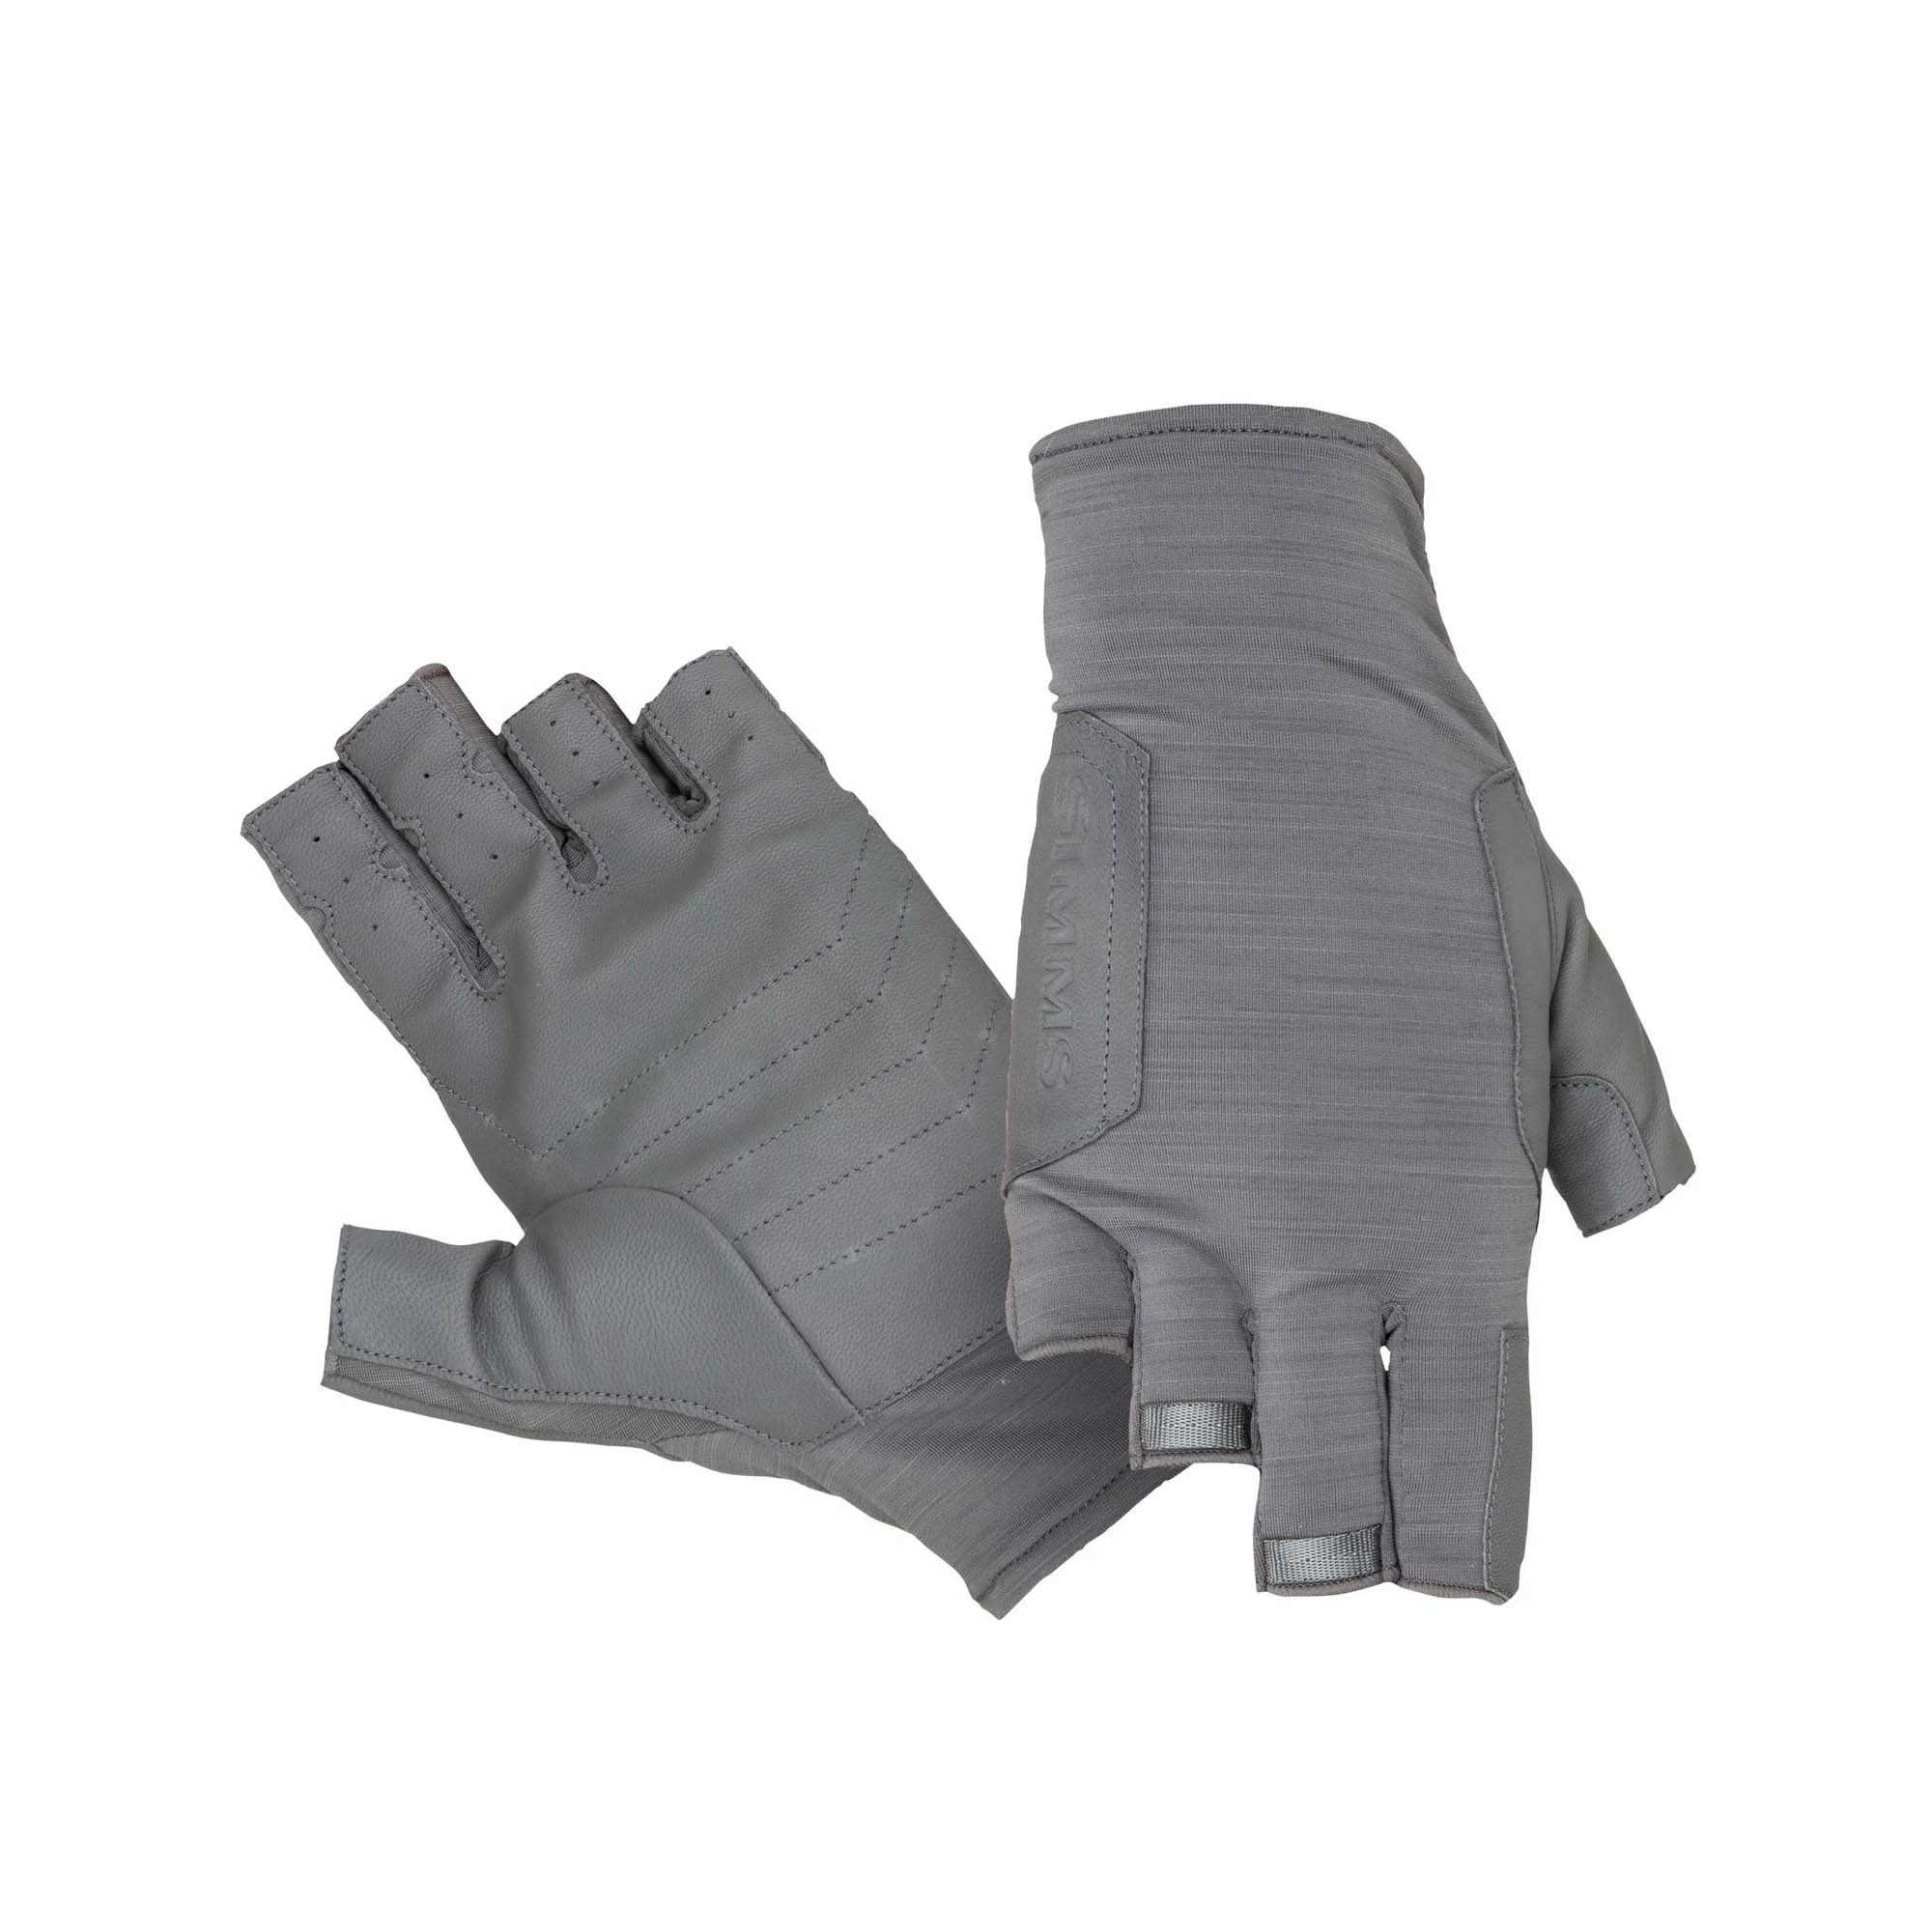 Simms Solarflex Guide Glove - Sterling - XL